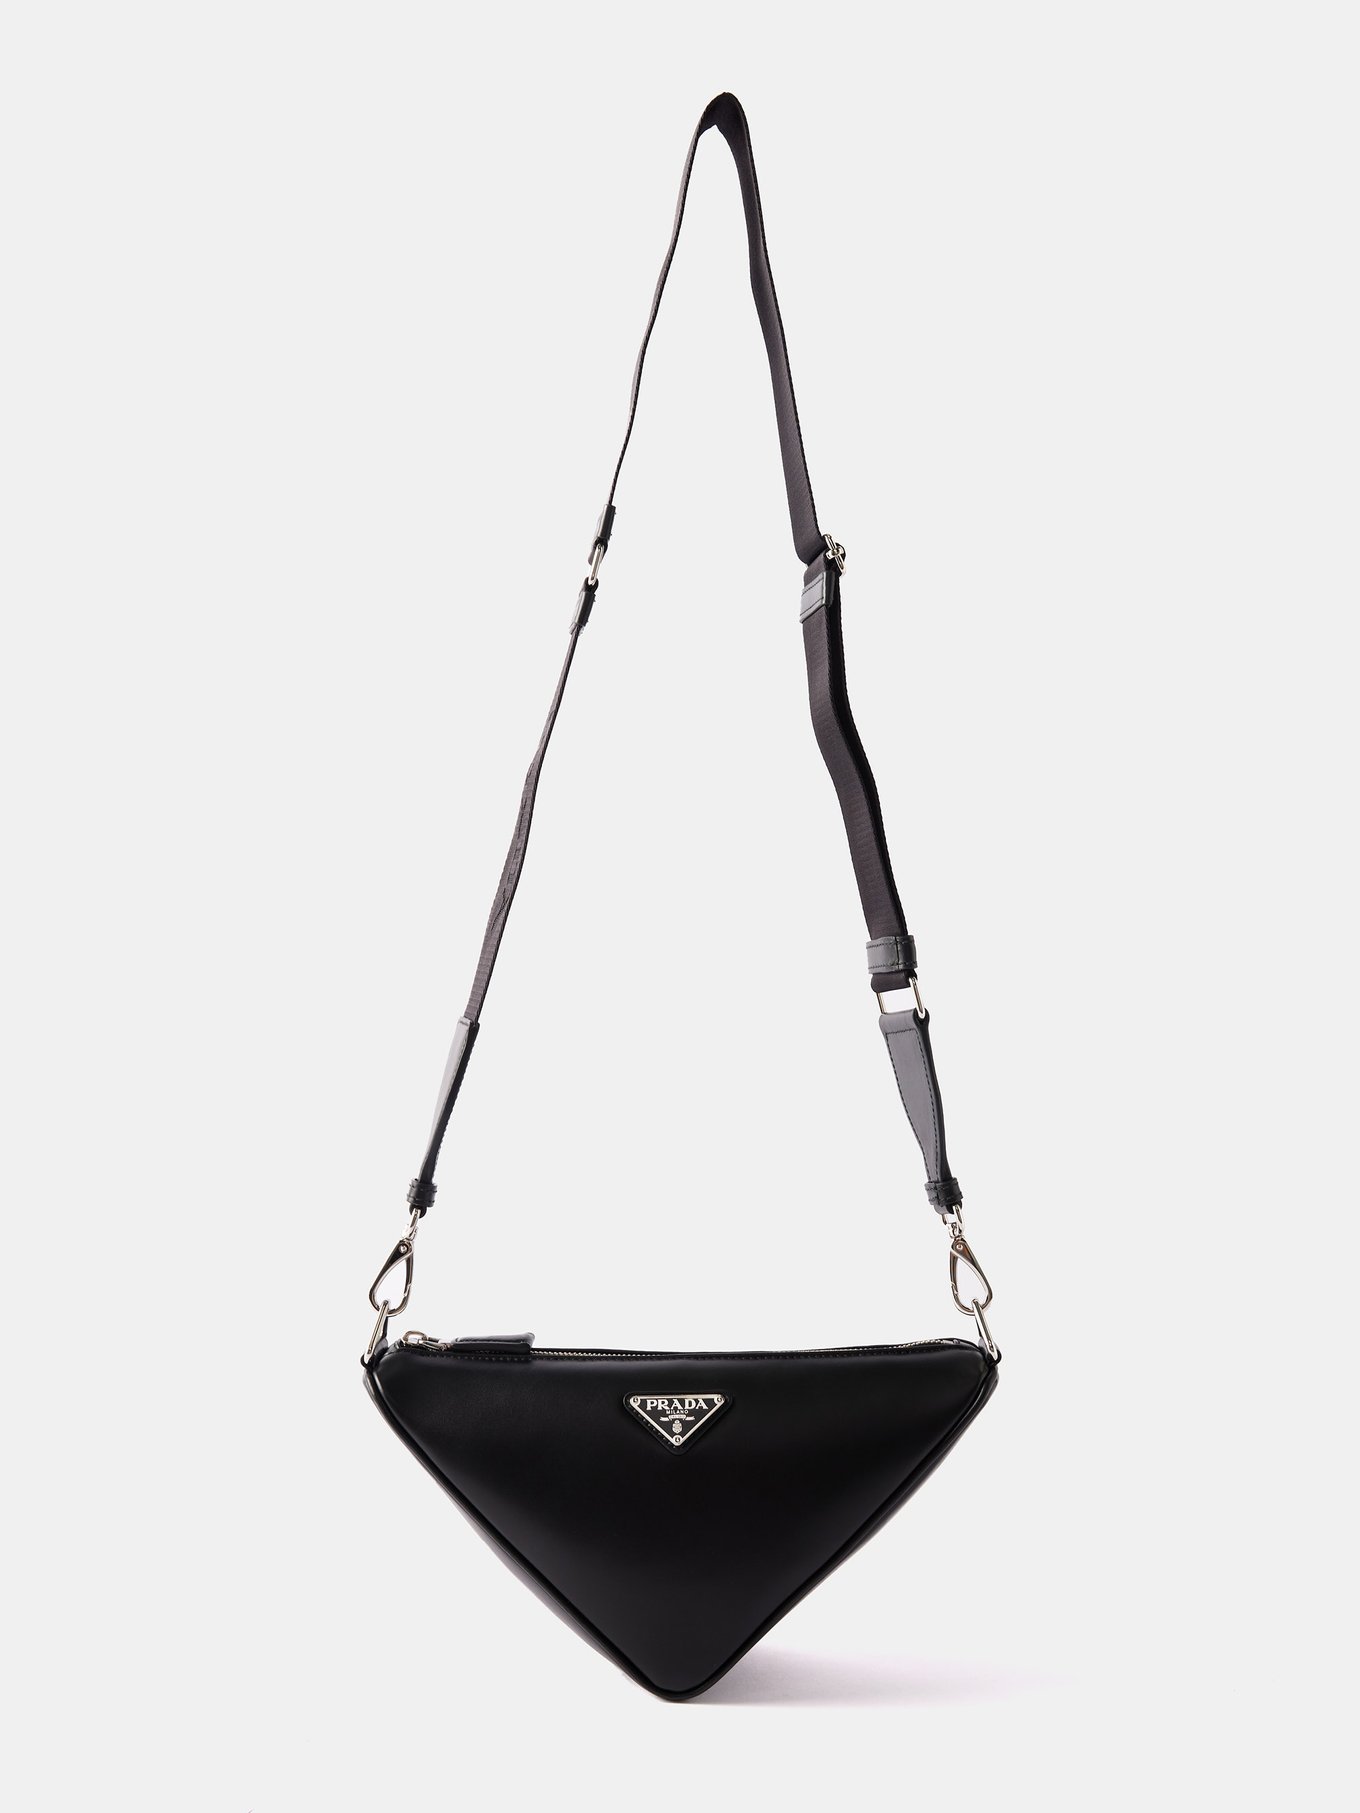 Black Triangle mini leather cross-body bag, Prada